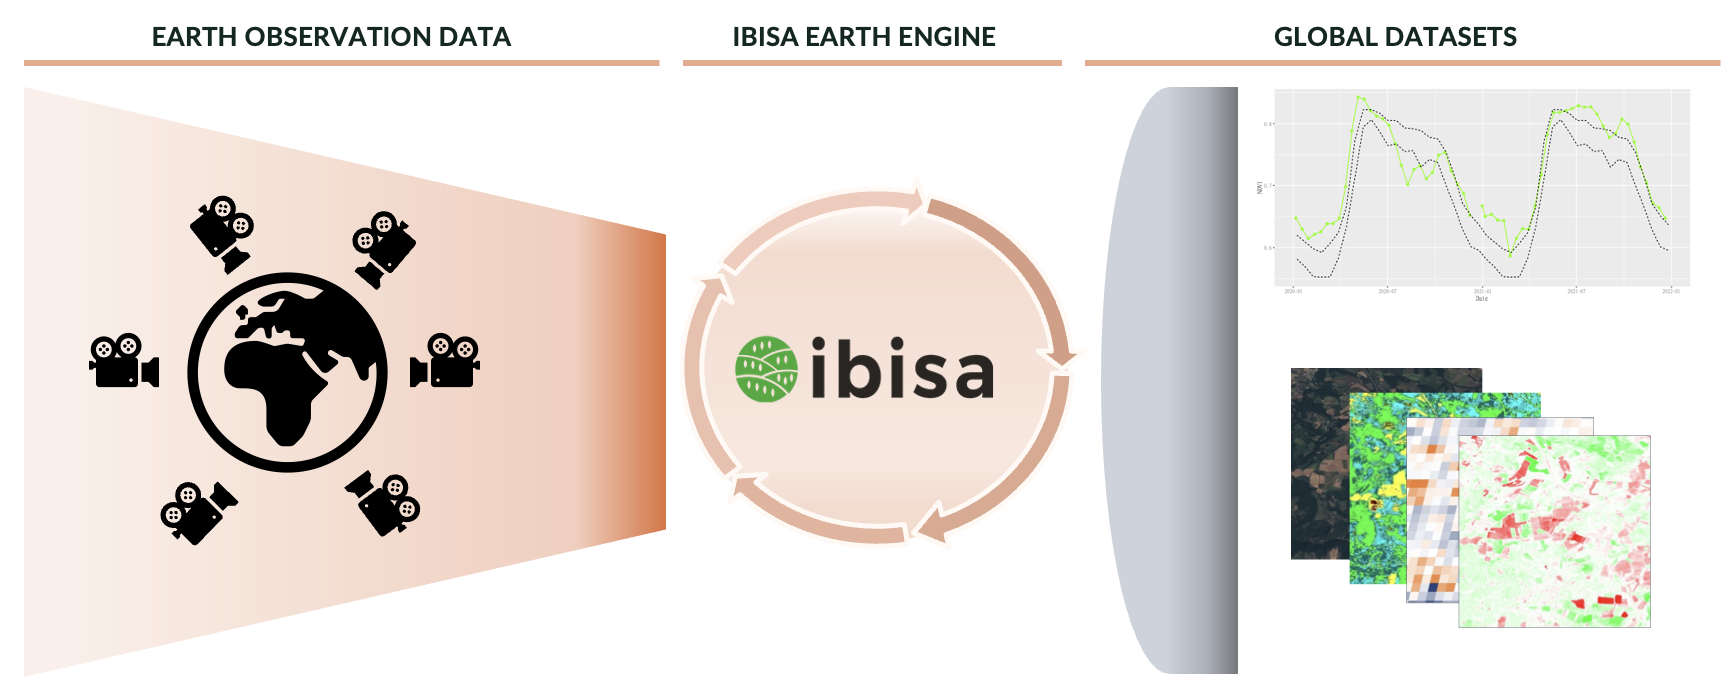 Figure 3: IBISA Earth Engine